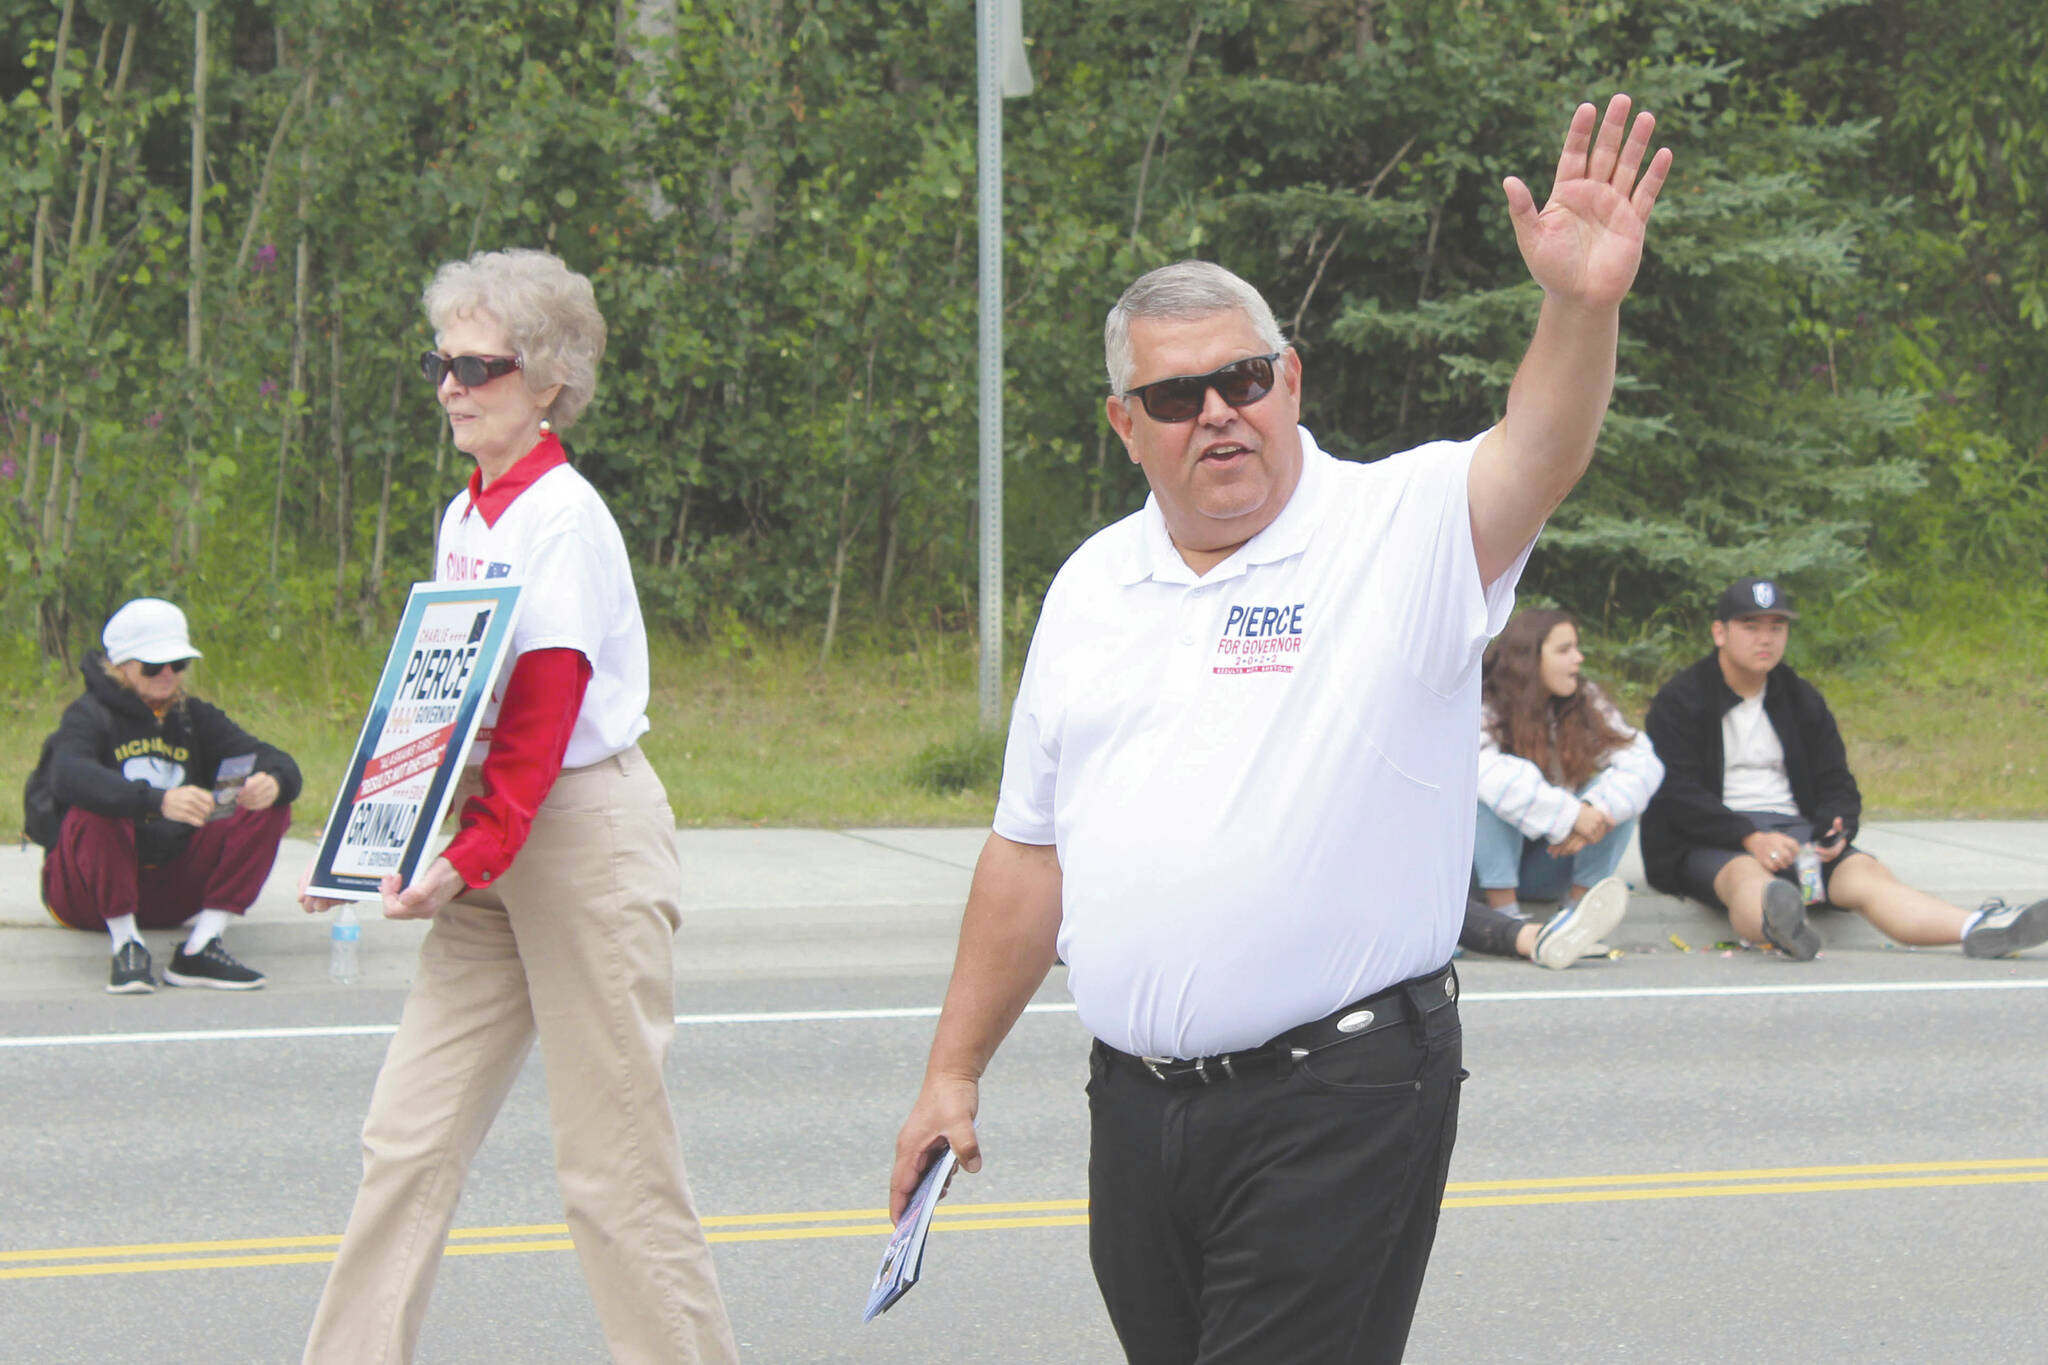 Ashlyn O’Hara/Peninsula Clarion
2022 gubernatorial candidate Charlie Pierce walks in the 65th annual Soldotna Progress Days Parade on July 23 in Soldotna.